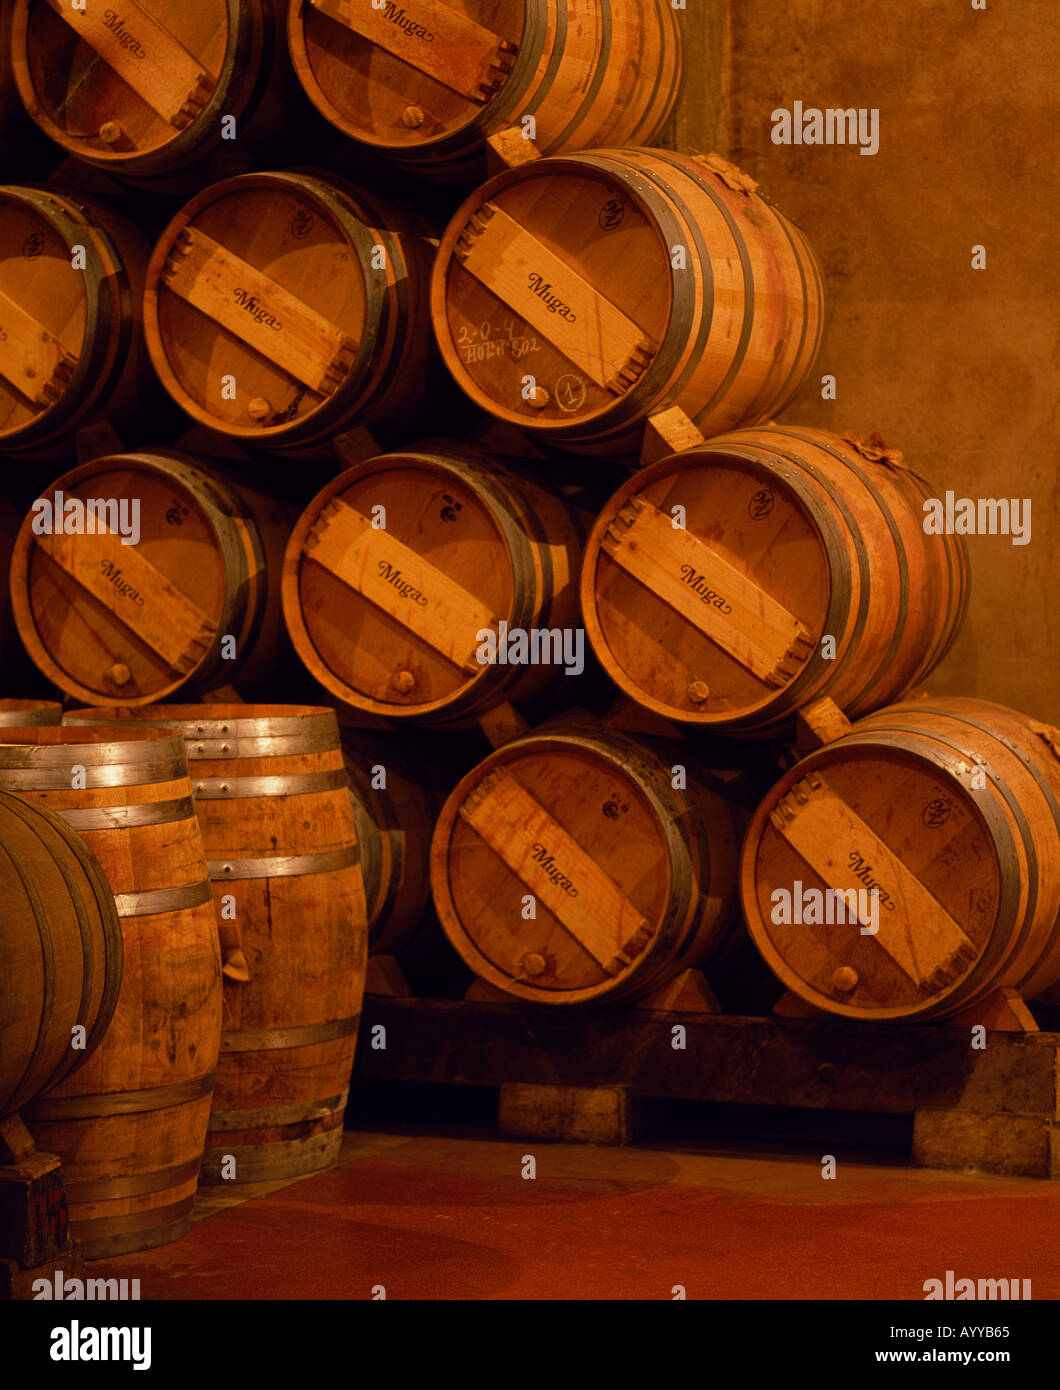 Barils de vin Rioja dans les caves souterraines à Muga winery Haro La Rioja Espagne Banque D'Images